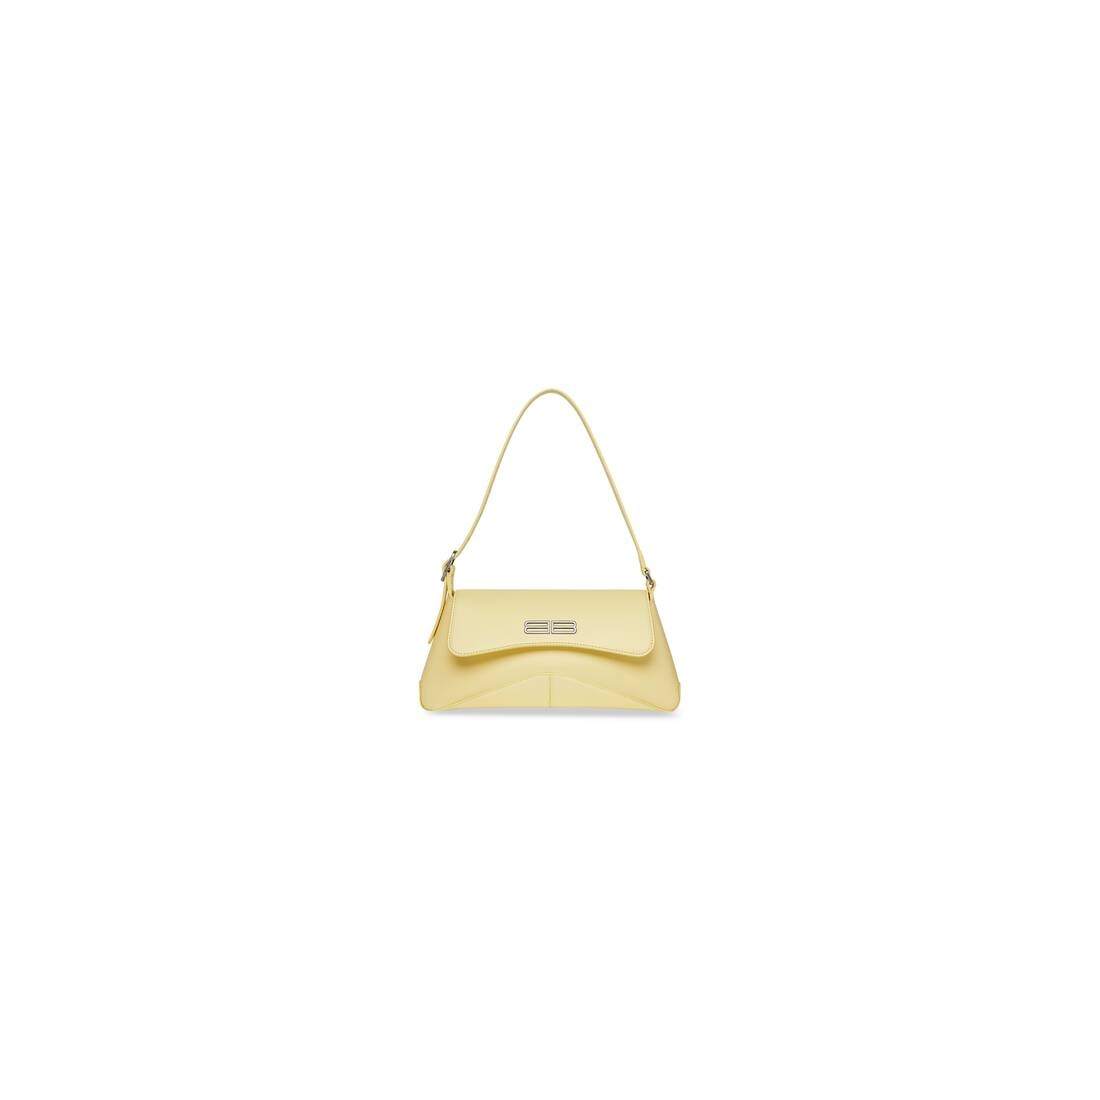 Balenciaga Small XX Flap Bag in Pale Yellow